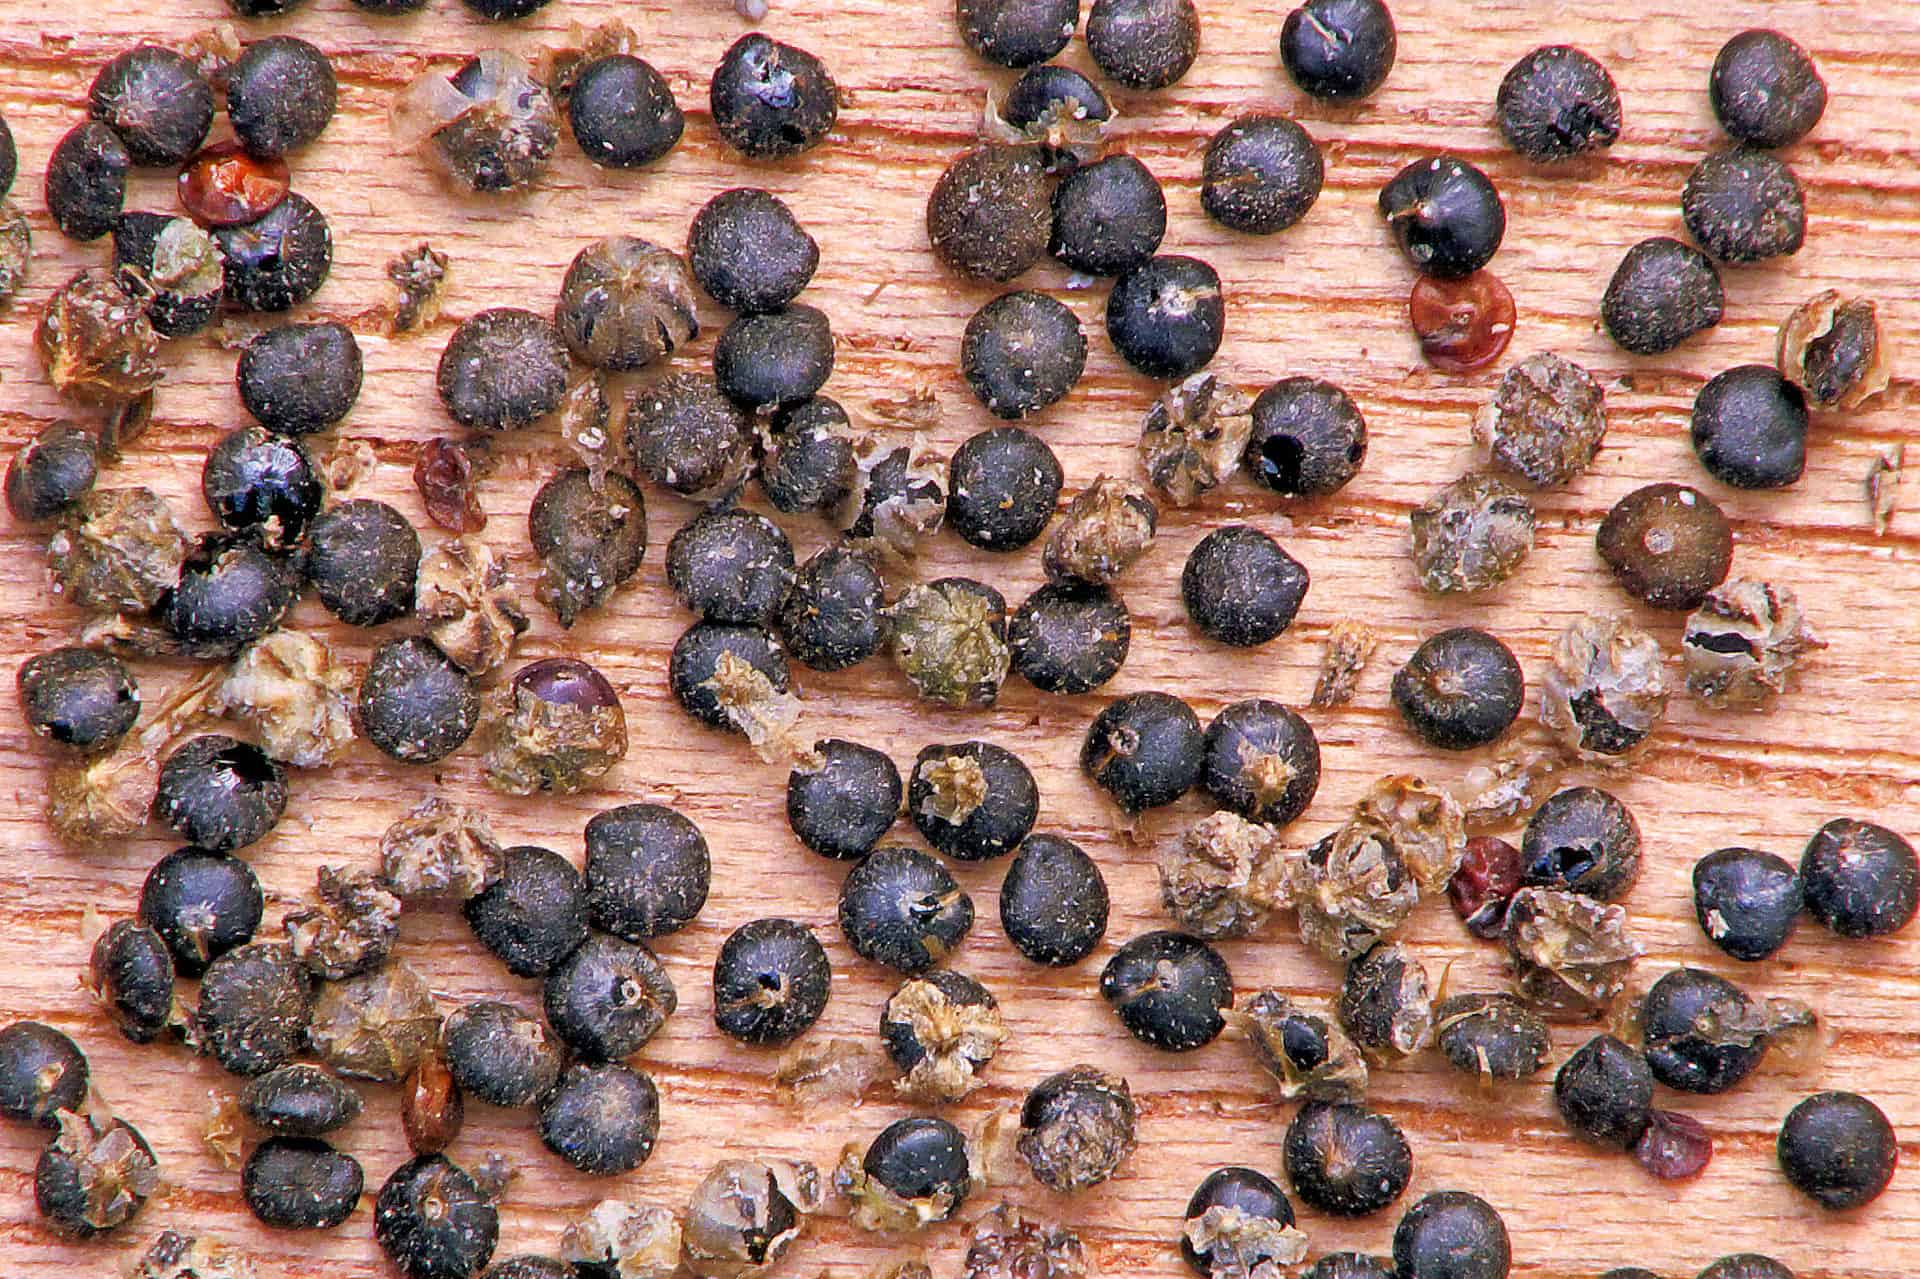 Chenopodium album propagation via seeds